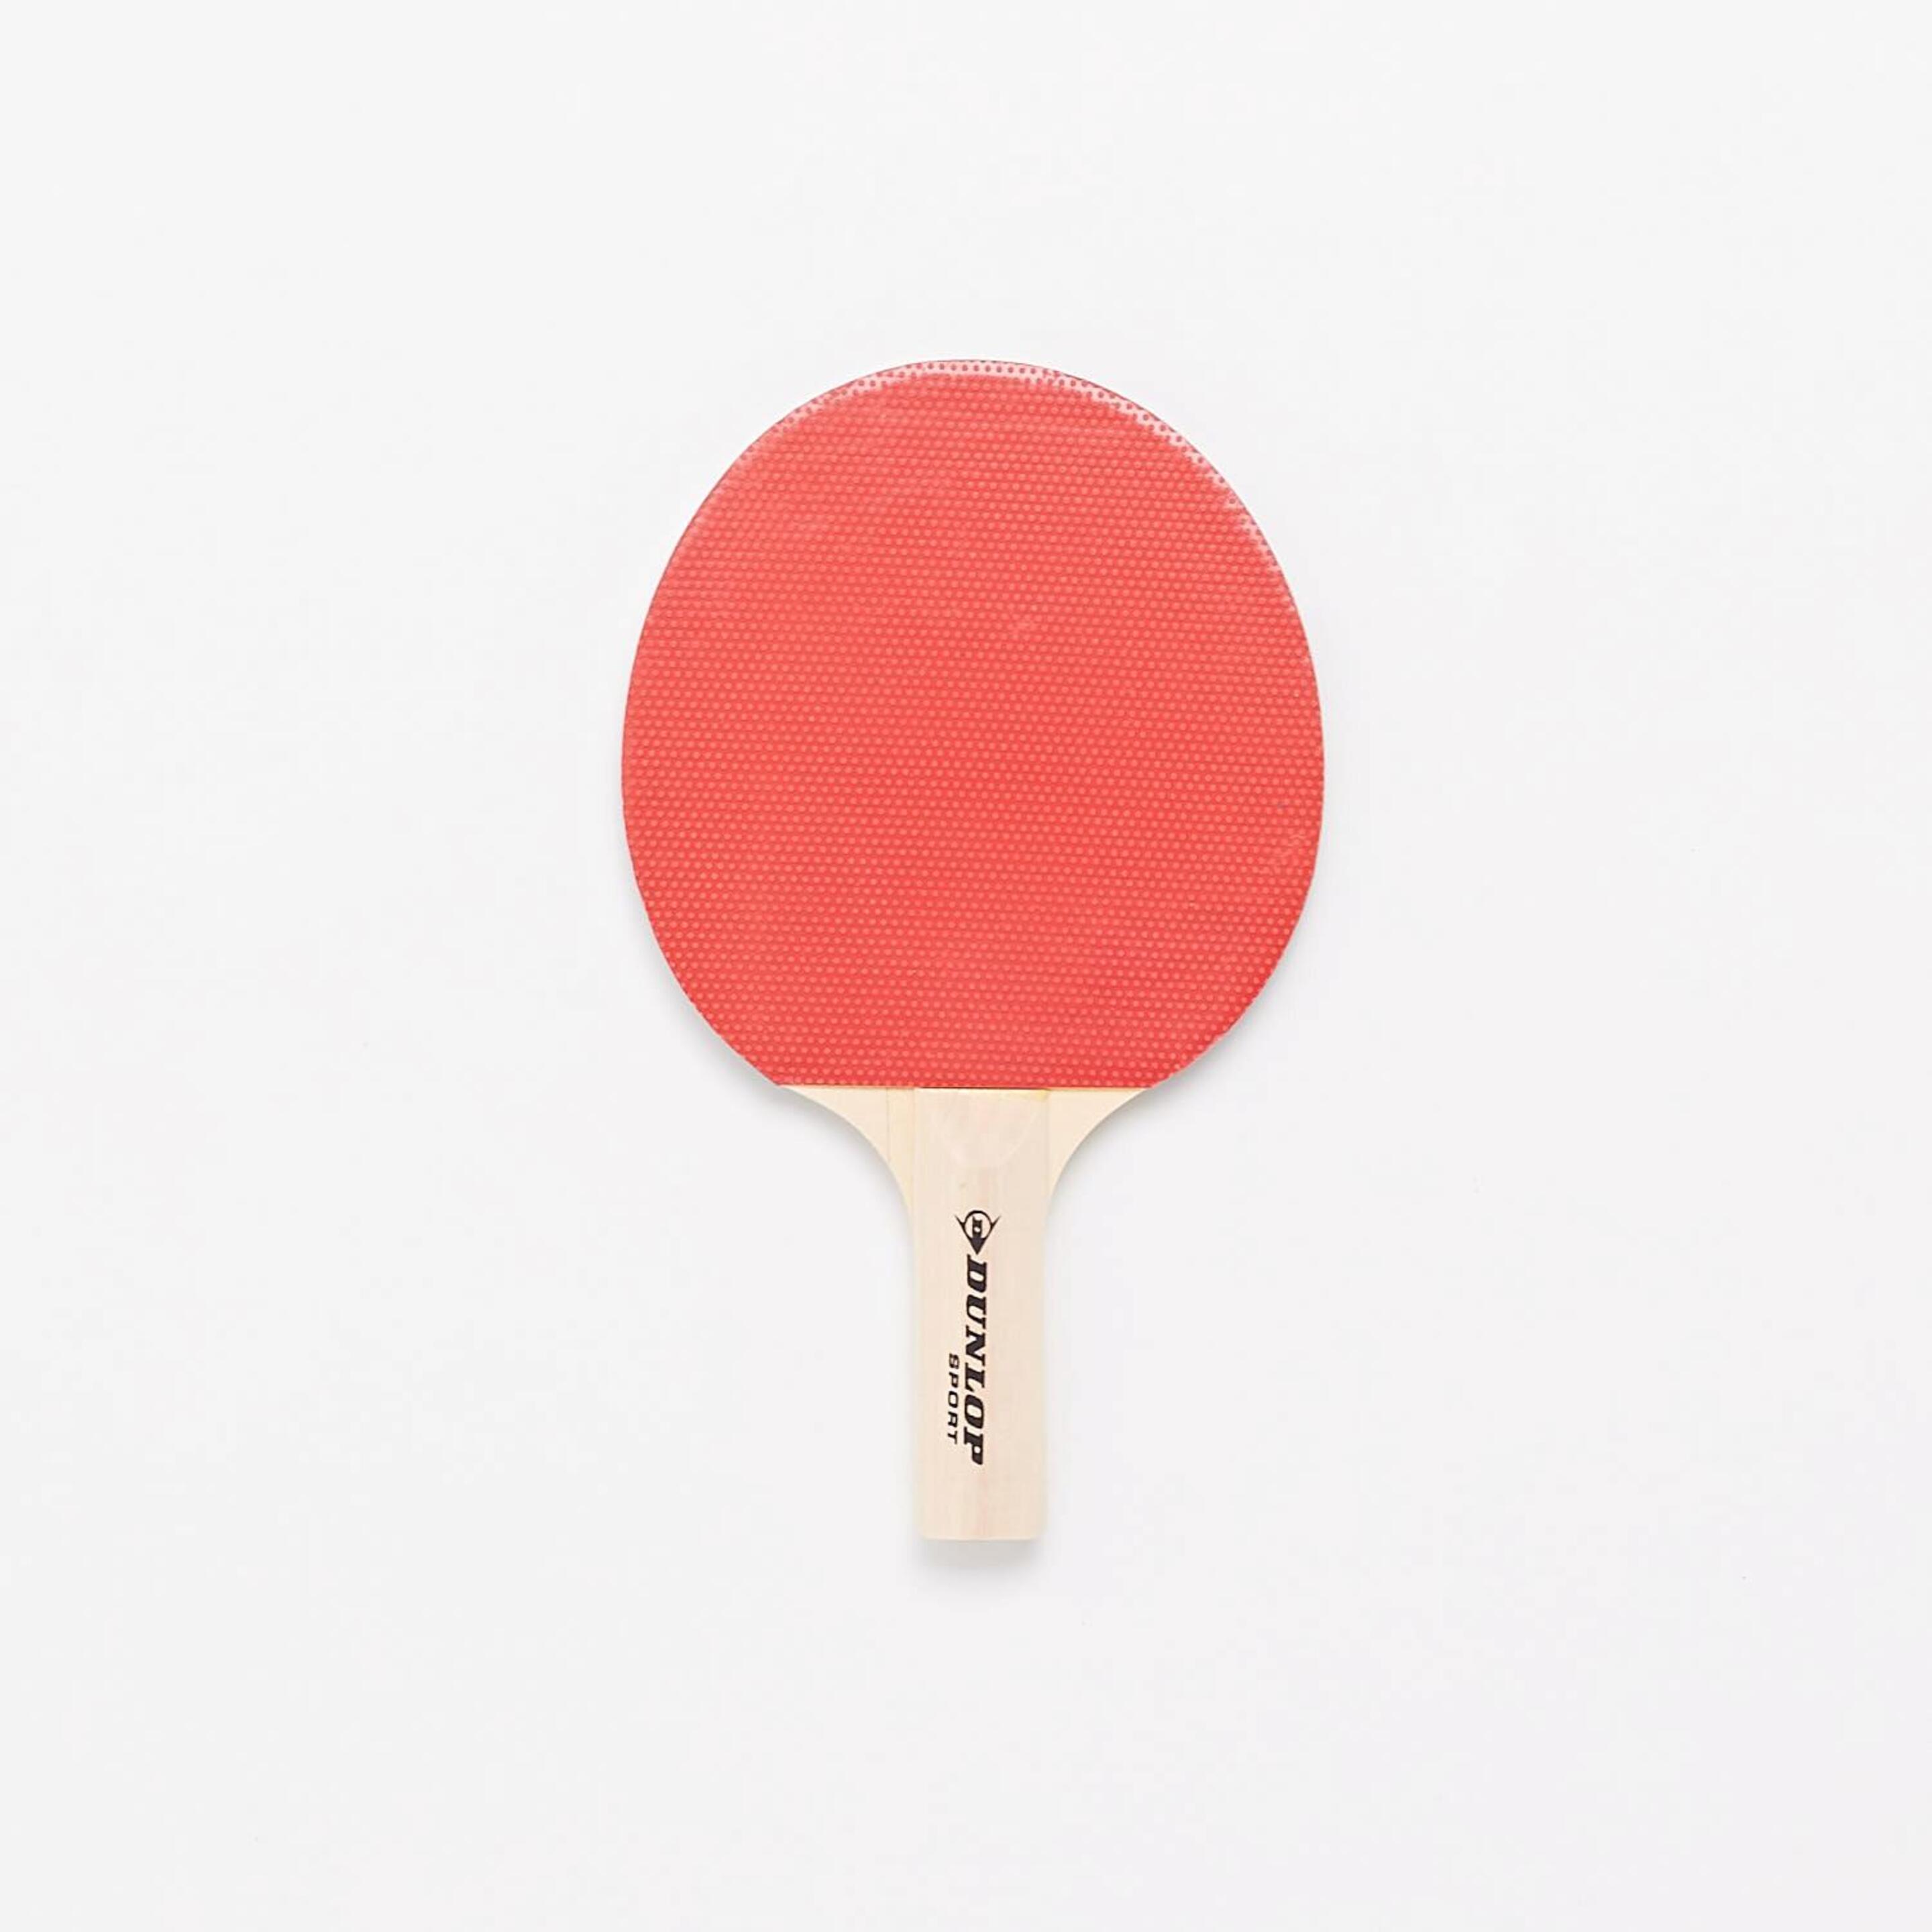 Raquete Dunlop Bt20 - rojo - Raquete Ping Pong